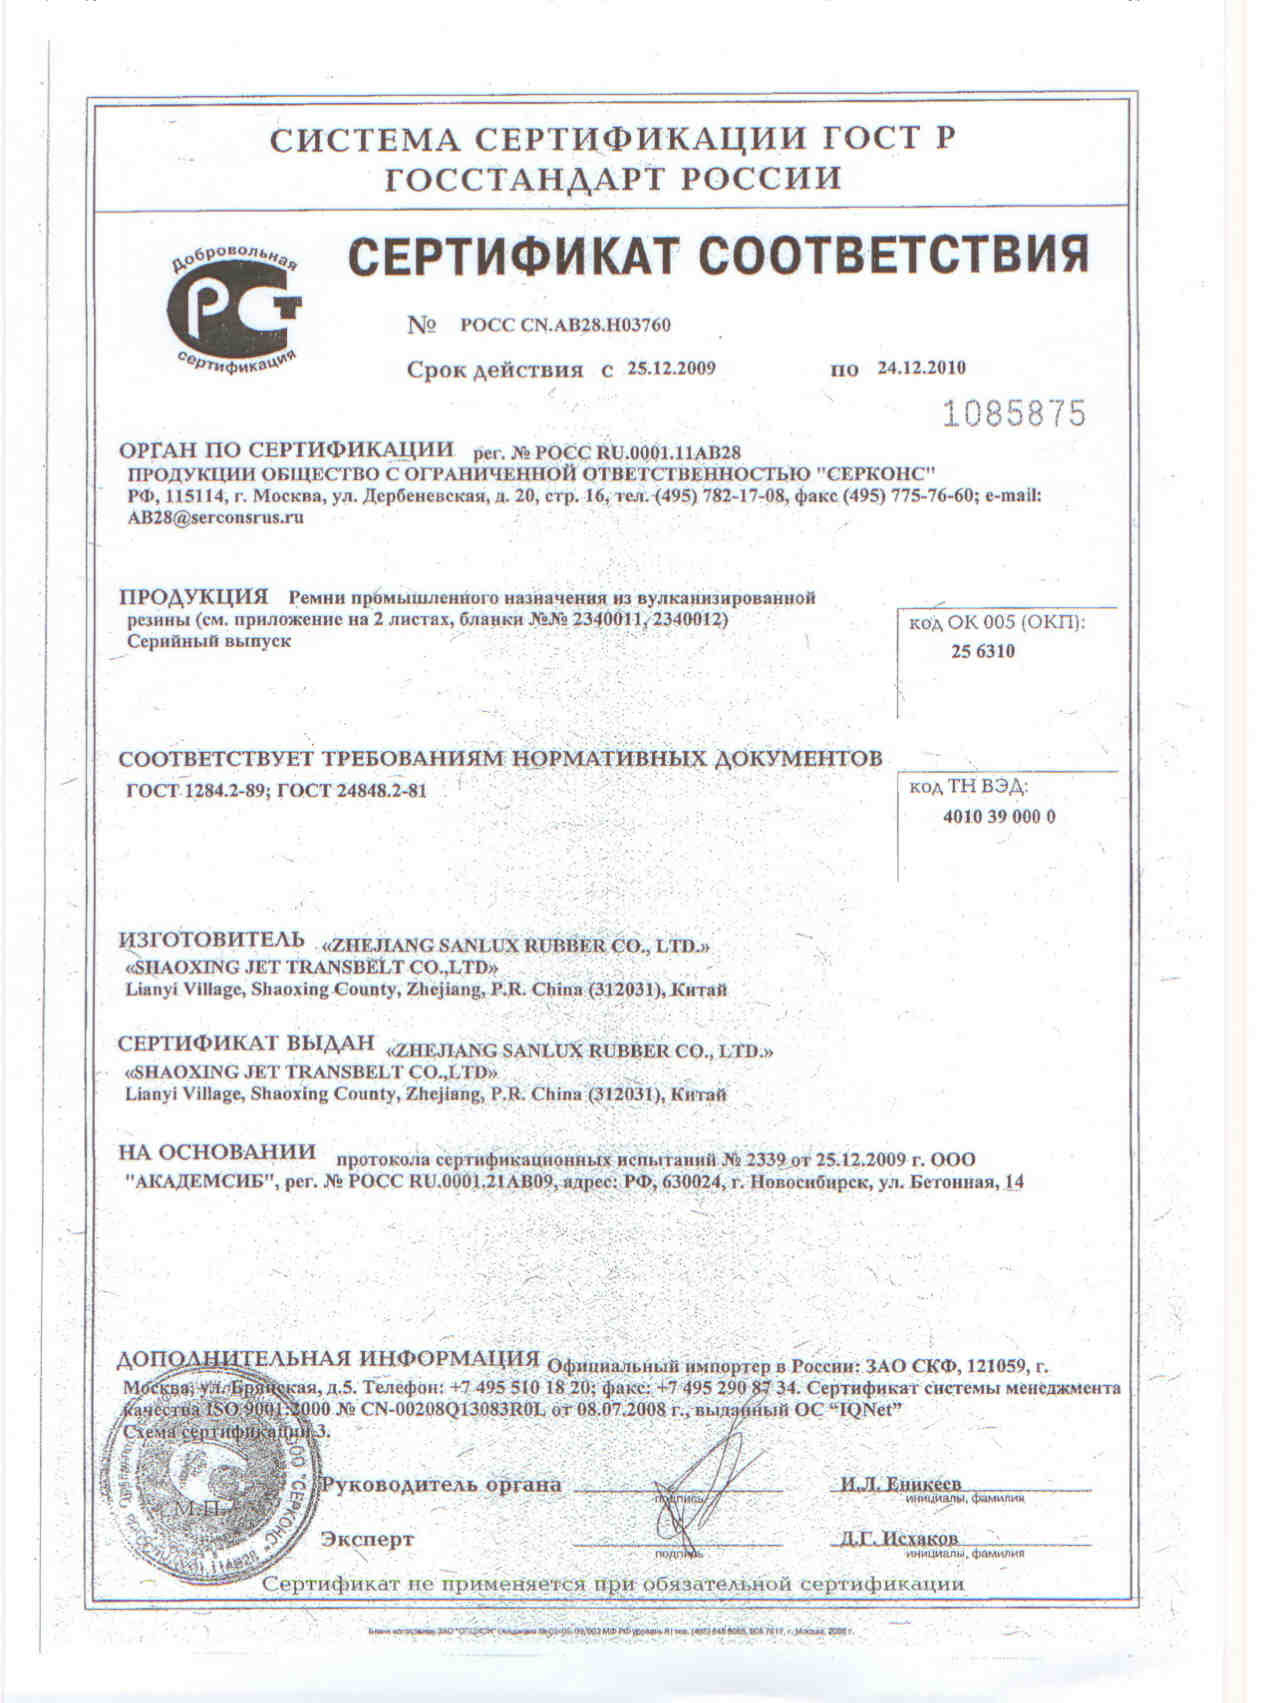 Номер сертификата россии. Номер сертификата соответствия. Hisum Steel номер сертификата.